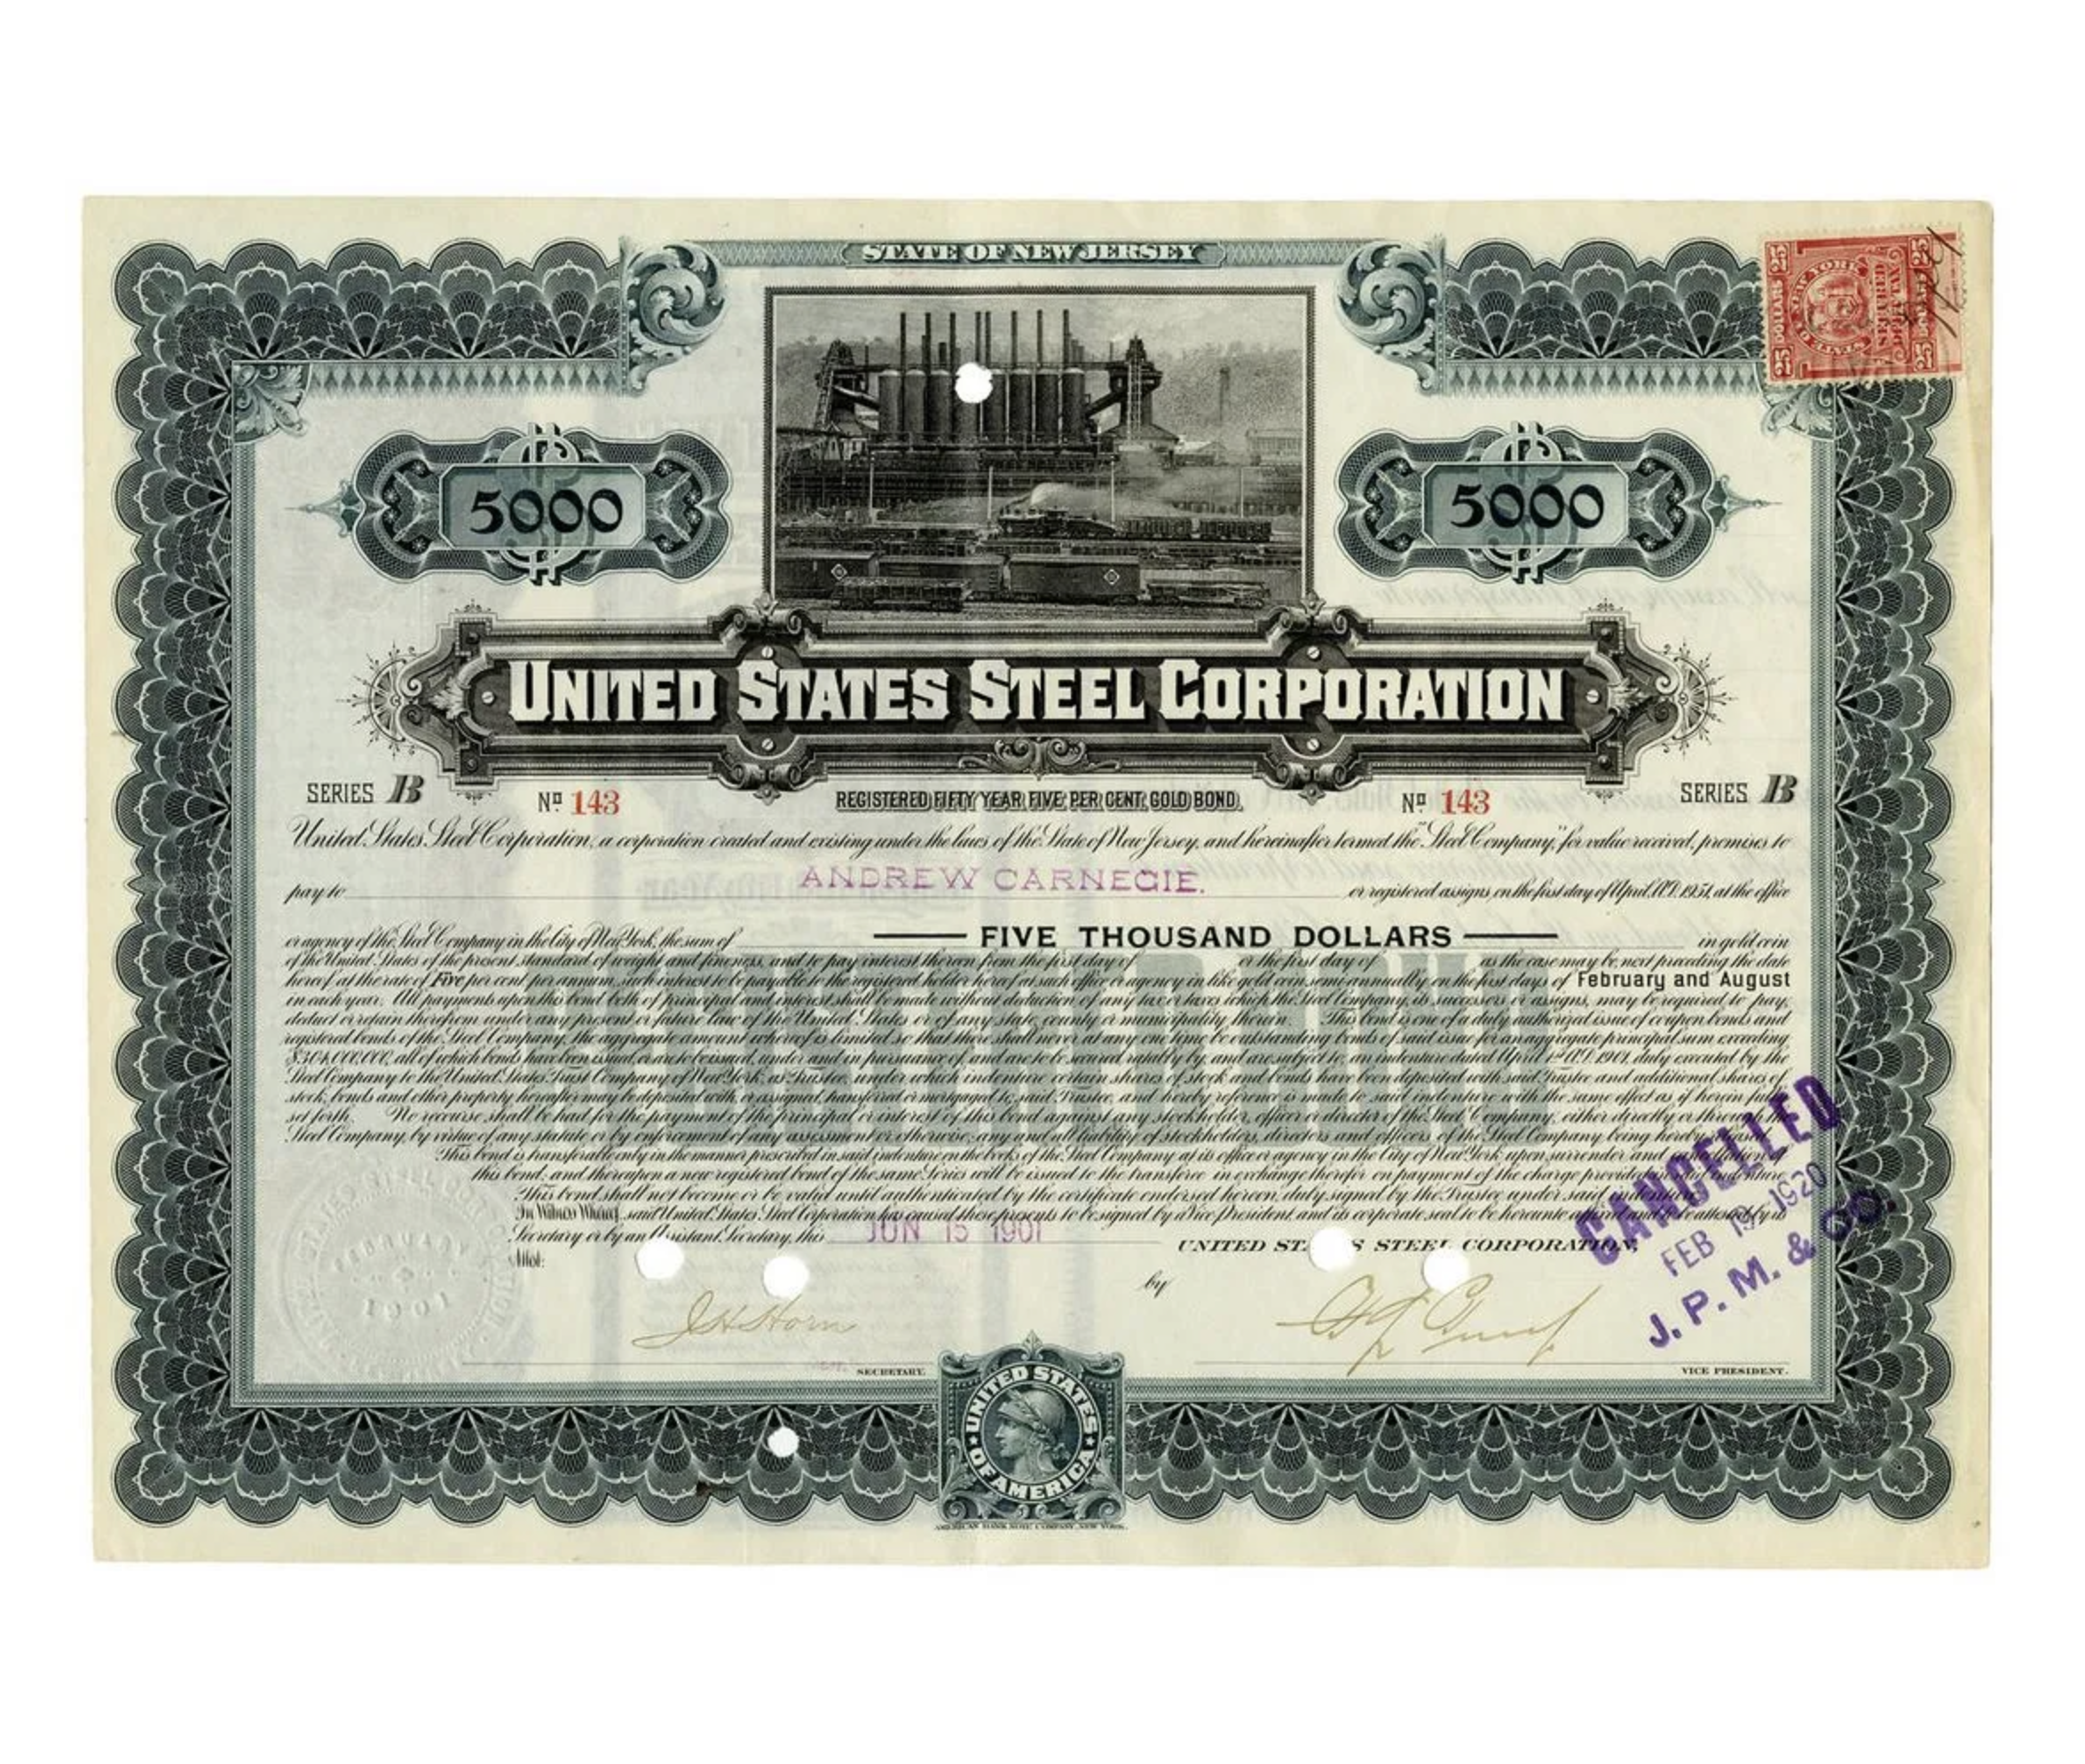 United States Steel Corporation $5,000 stock